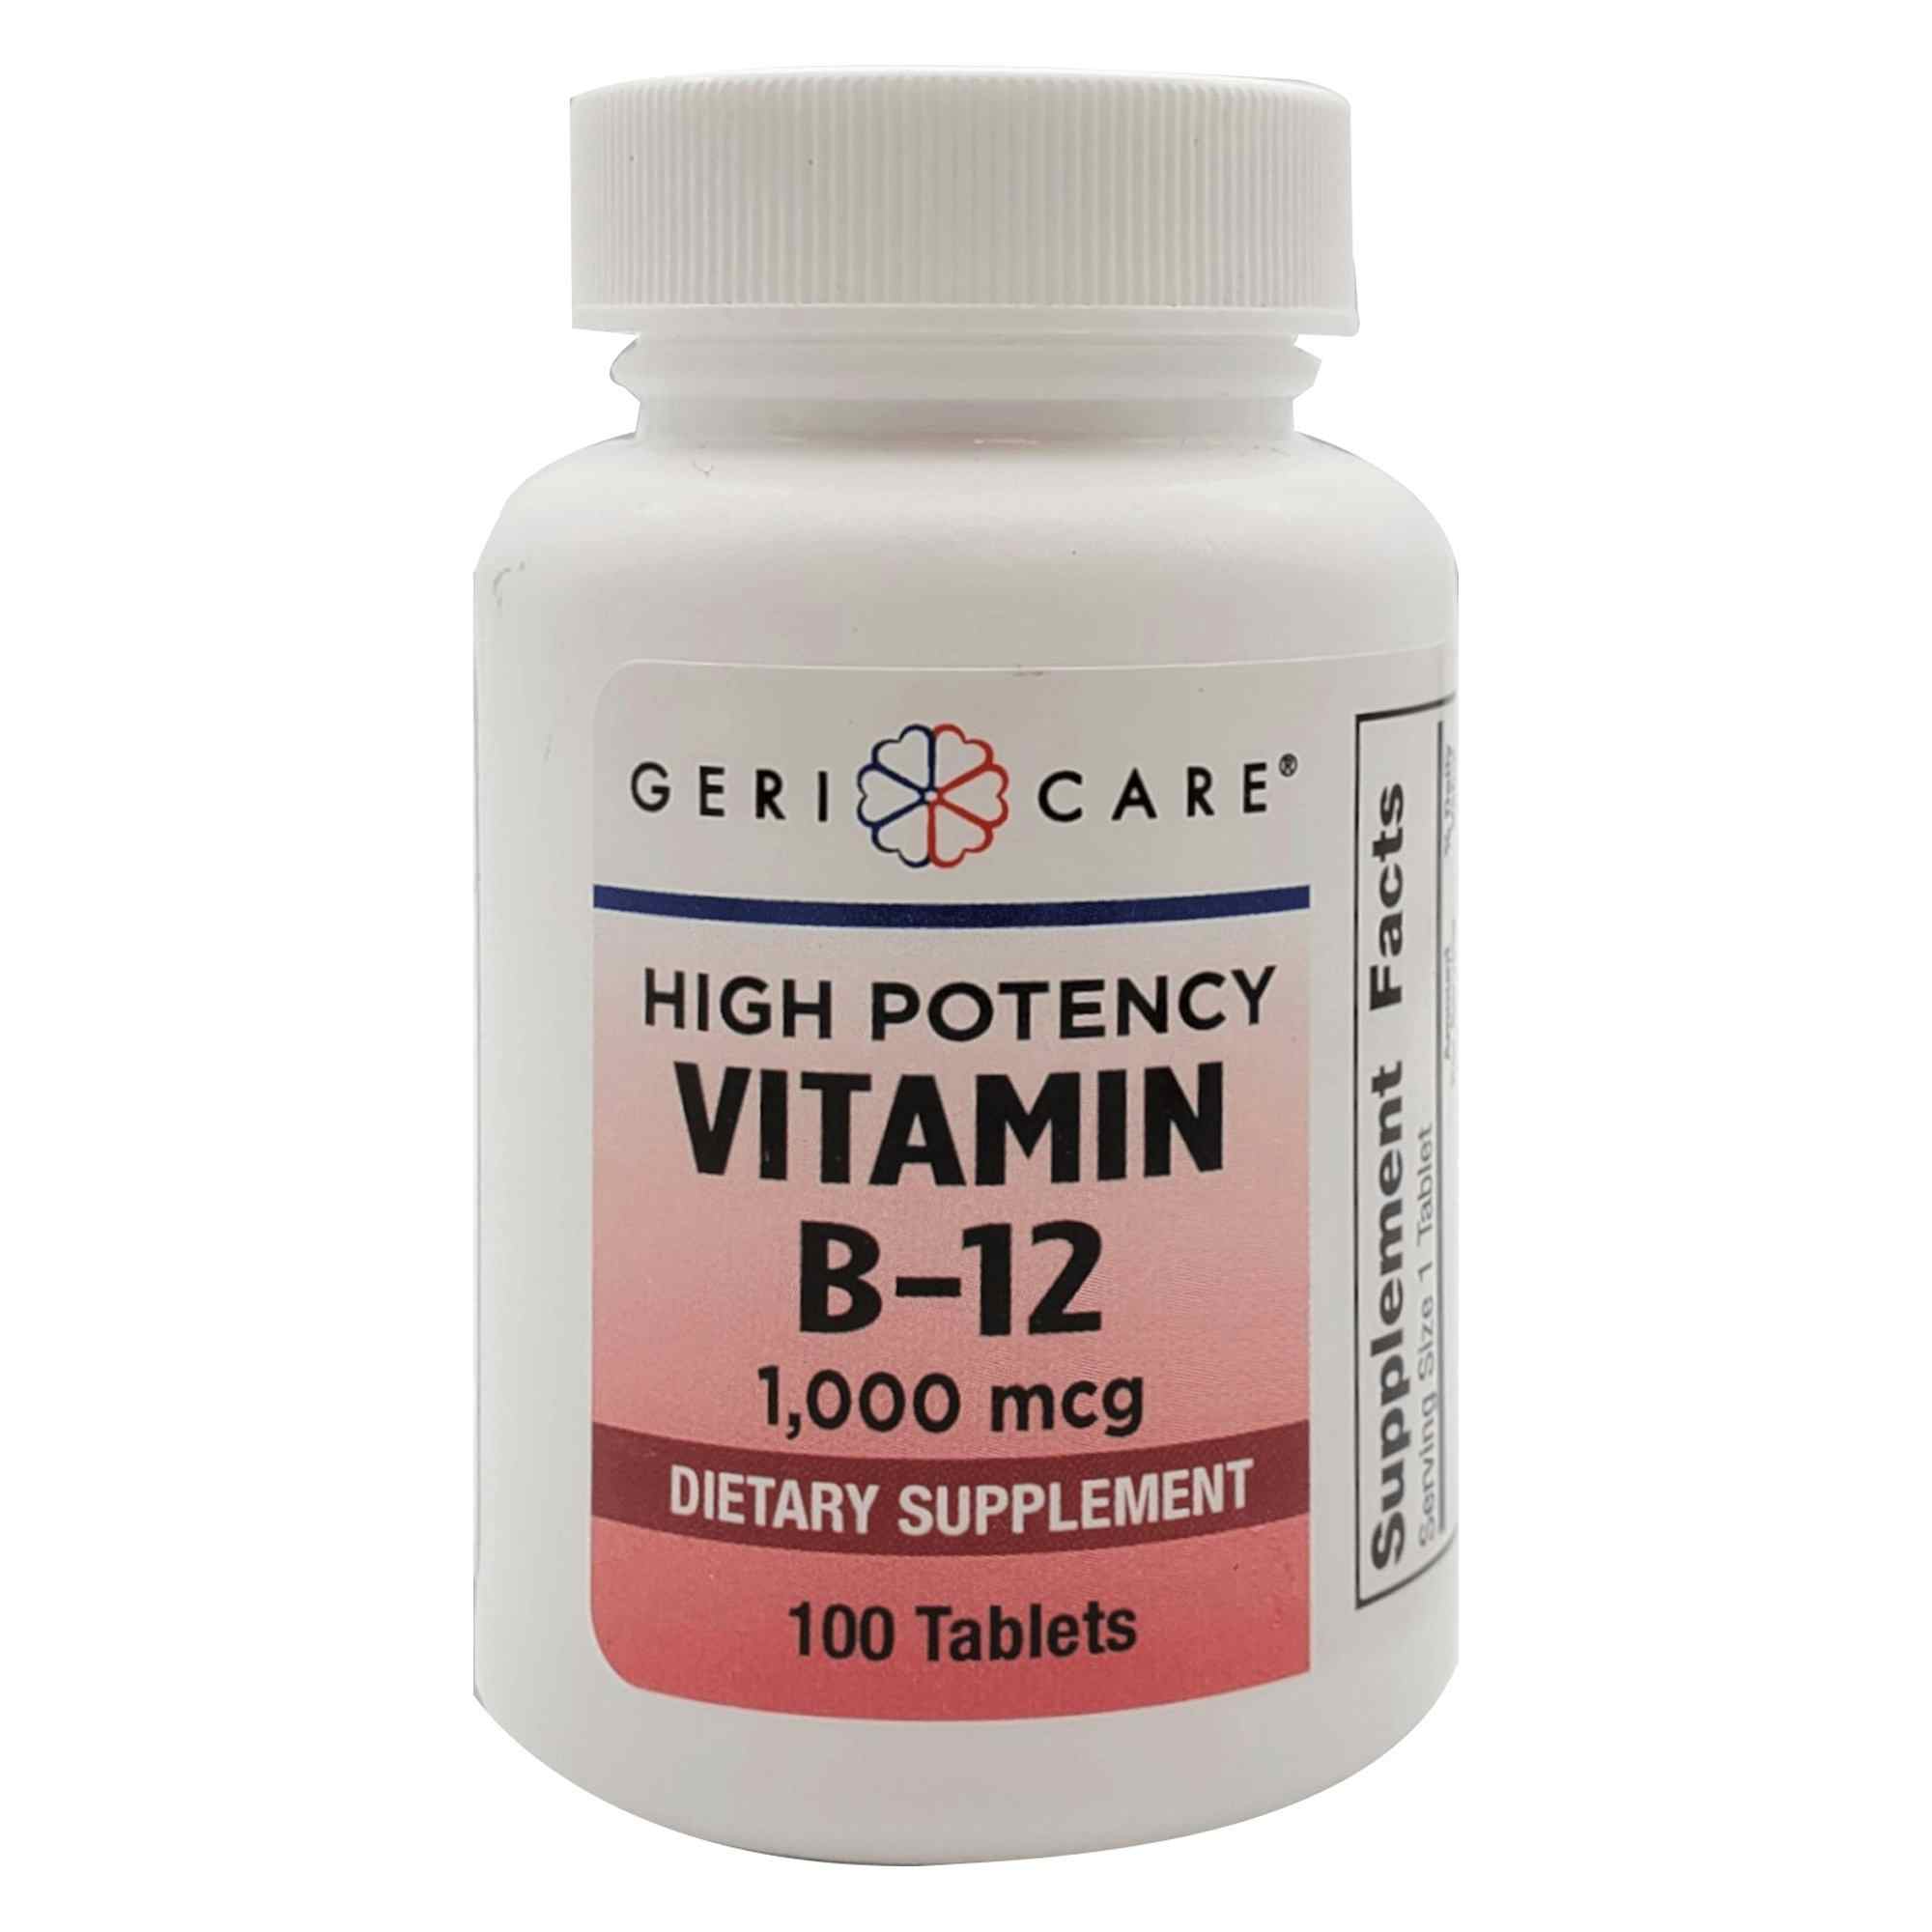 Geri Care High Potency Vitamin B-12 Dietary Supplement, 1,000 mcg, 100 Tablets, 896-01-GCP, 1 Bottle